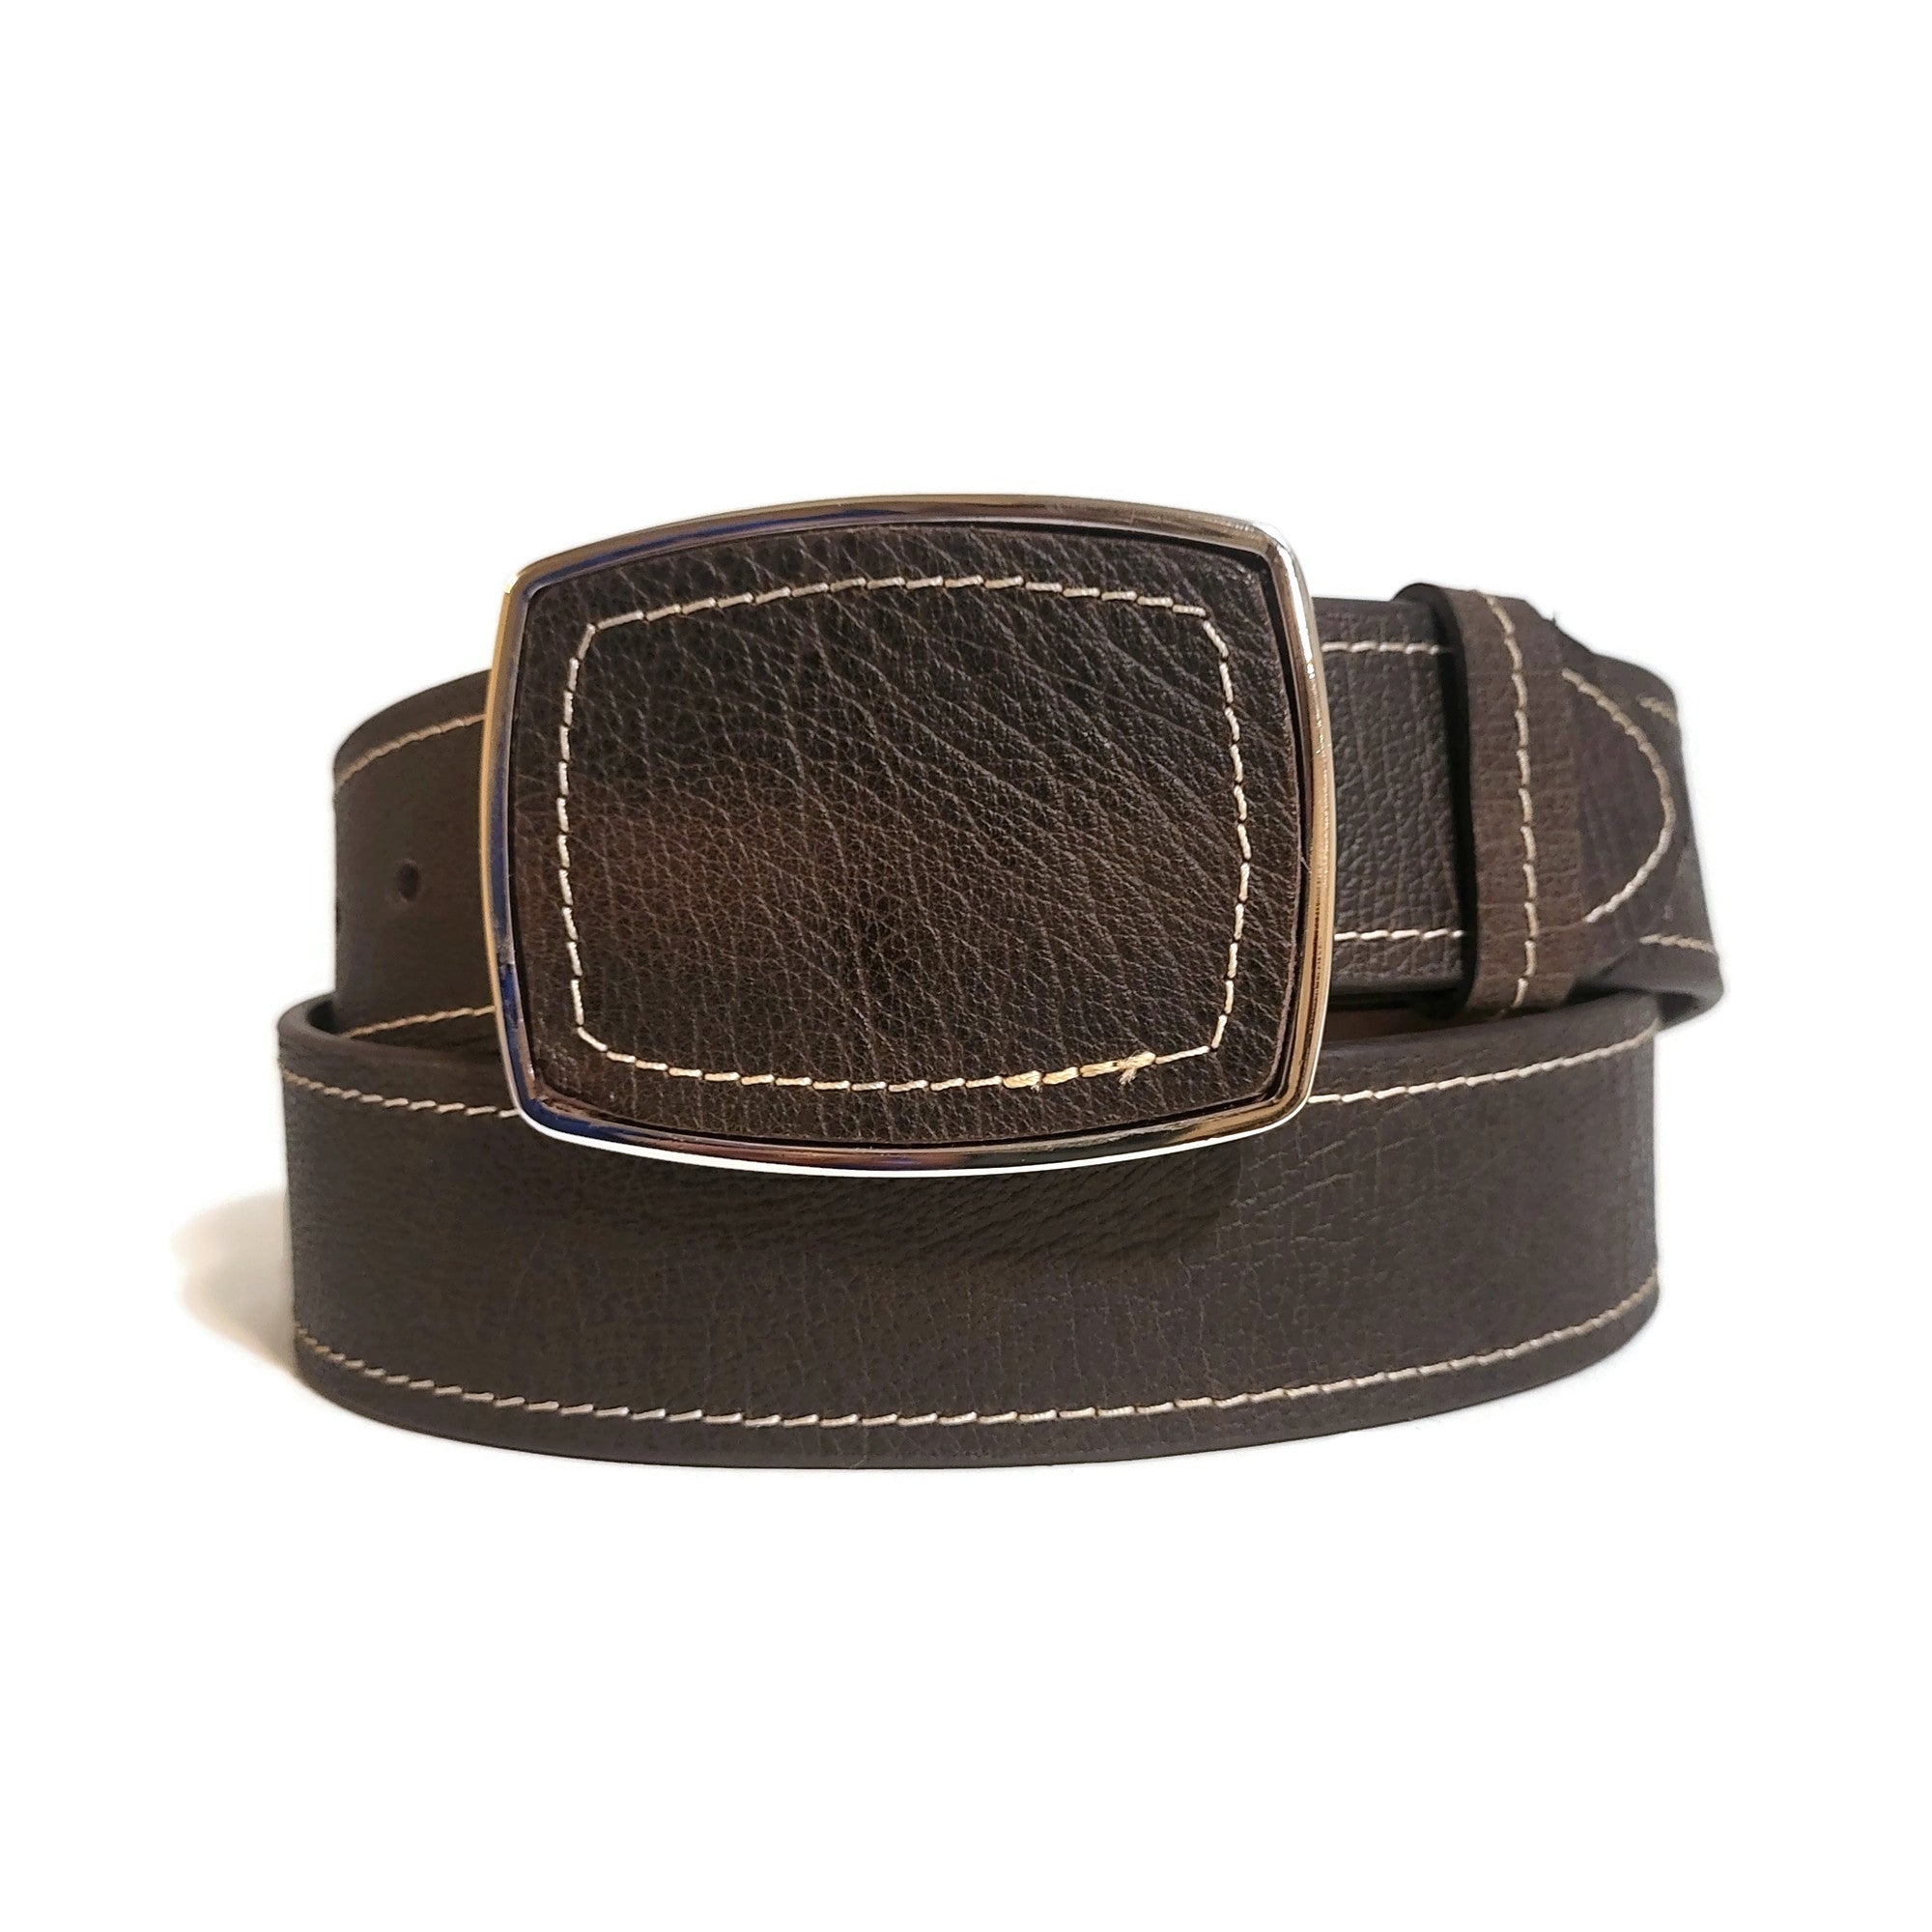 Leather Belt for women , brown belt